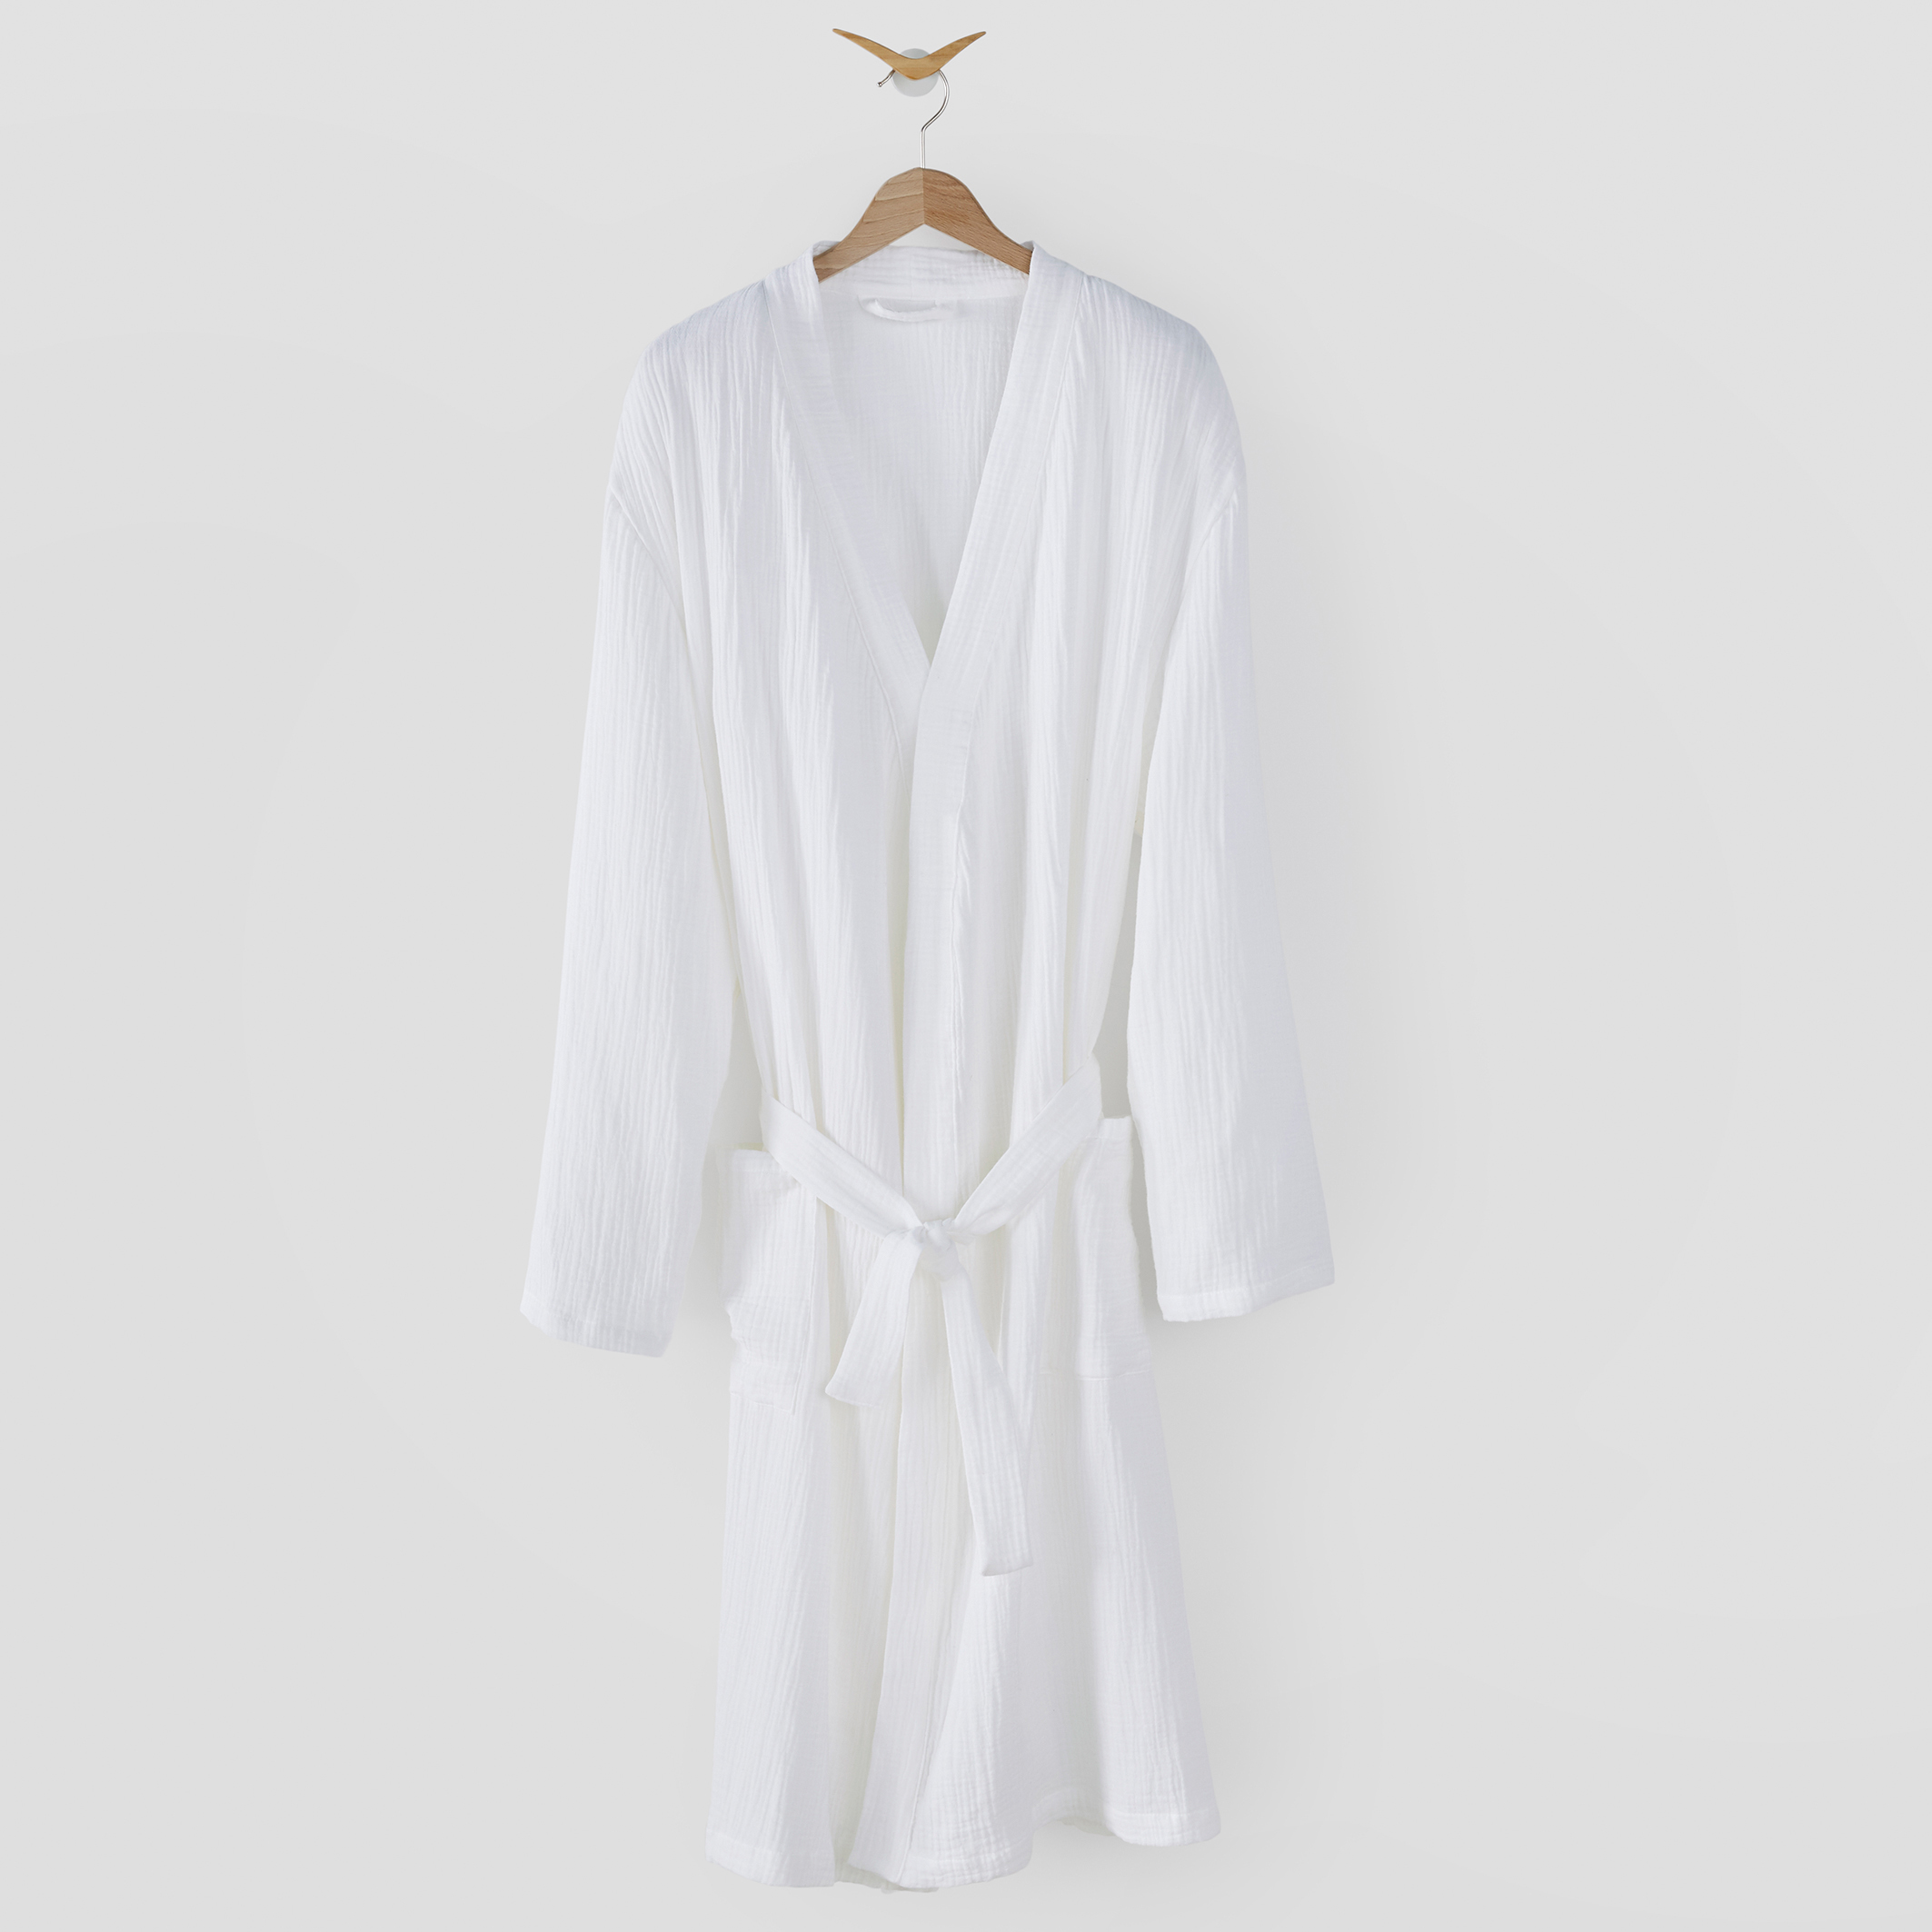 Kumla kimono bathrobe in cotton muslin La Redoute Interieurs | La Redoute